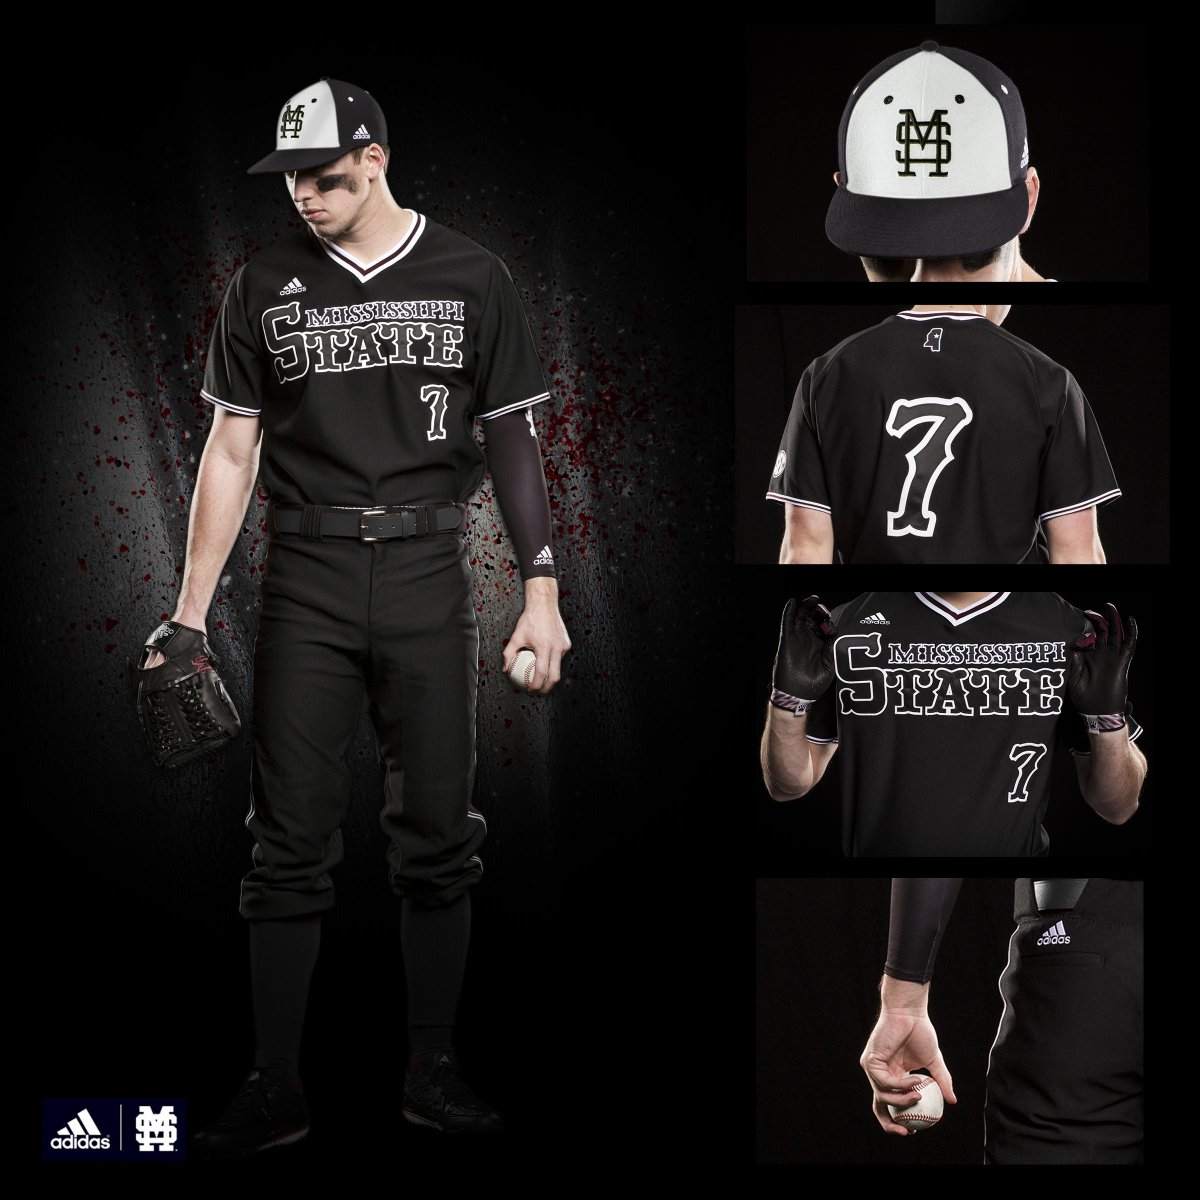 mississippi state black baseball uniforms